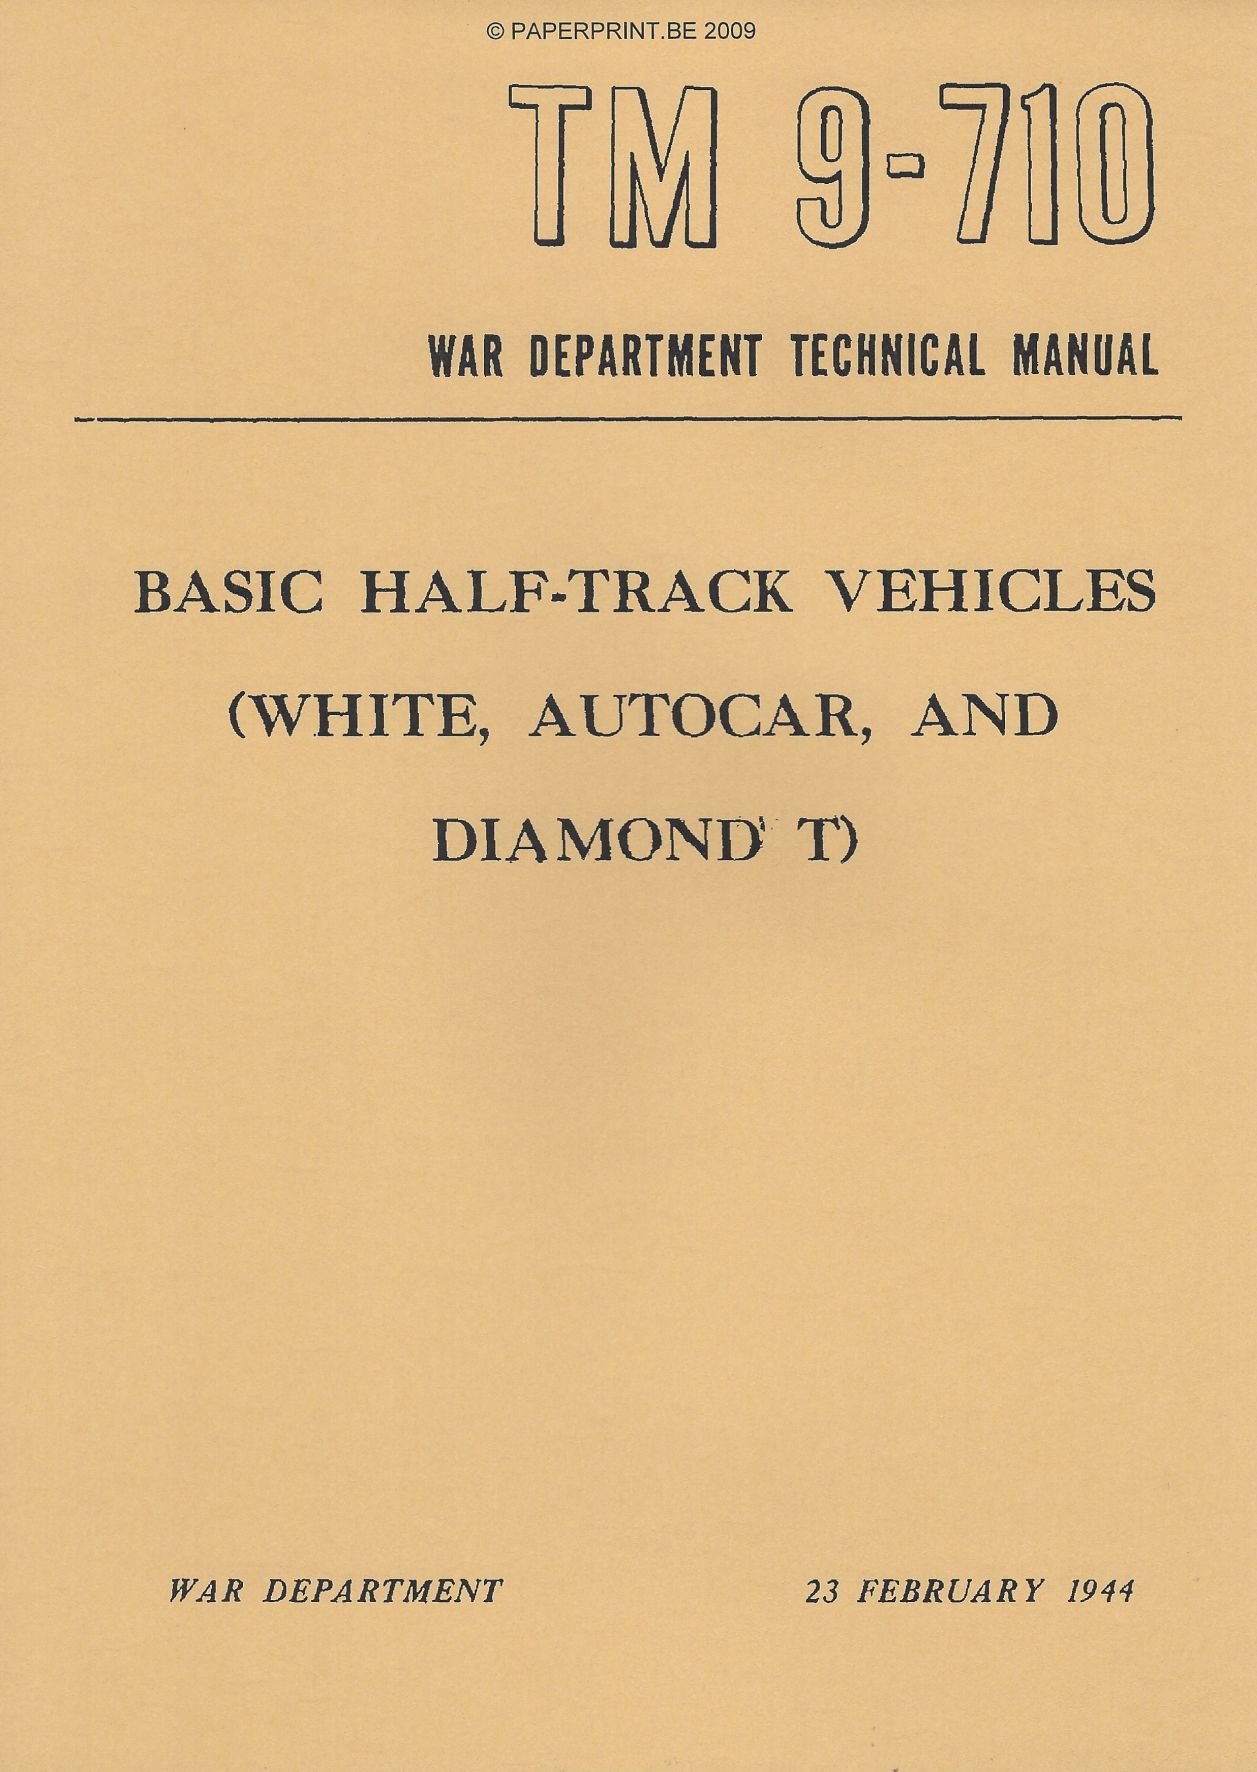 TM 9-710 US BASIC HALF-TRACK VEHICLES (WHITE, AUTOCAR, AND DIAMOND T)